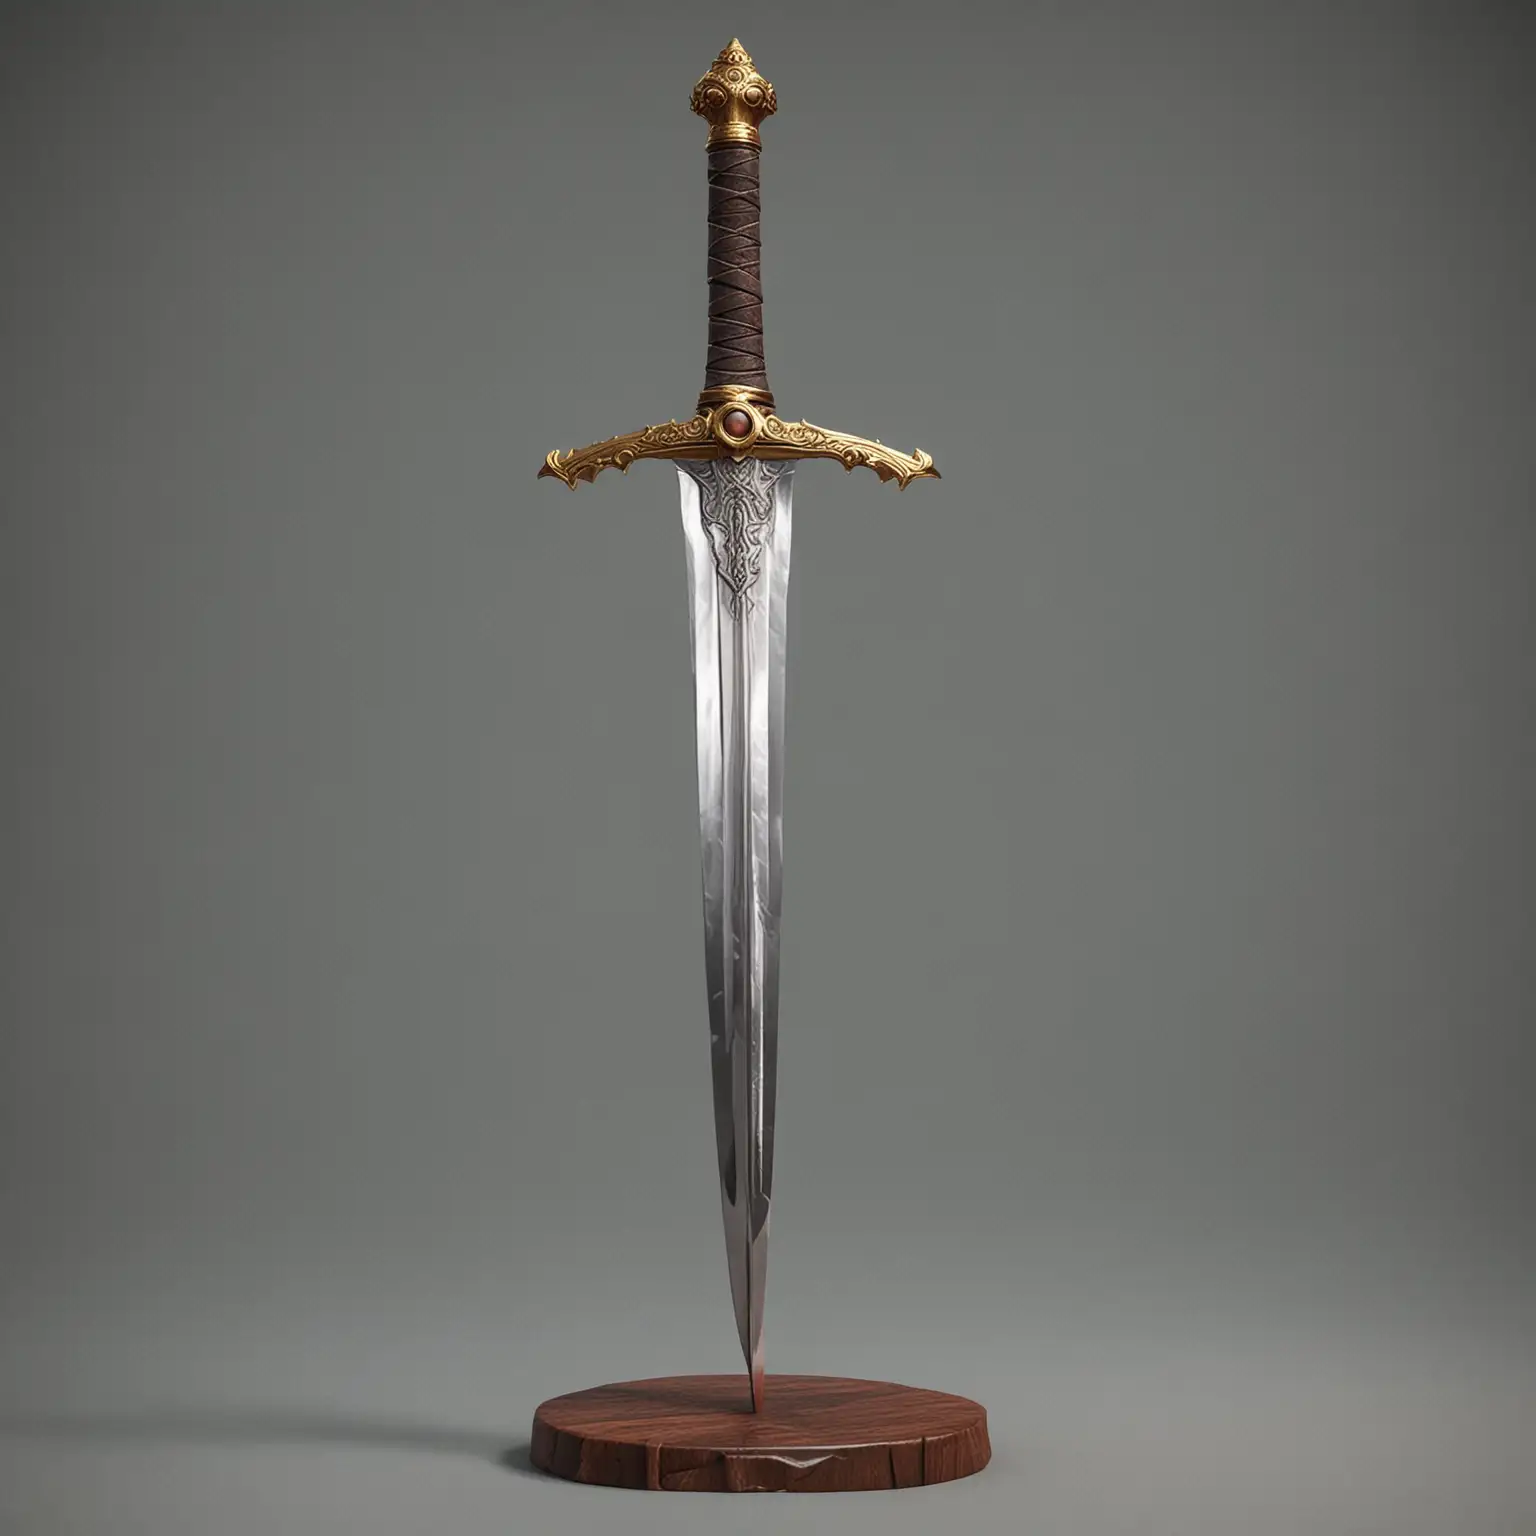 Realistic Sword Balances Detailed Illustration of a Balanced Sword